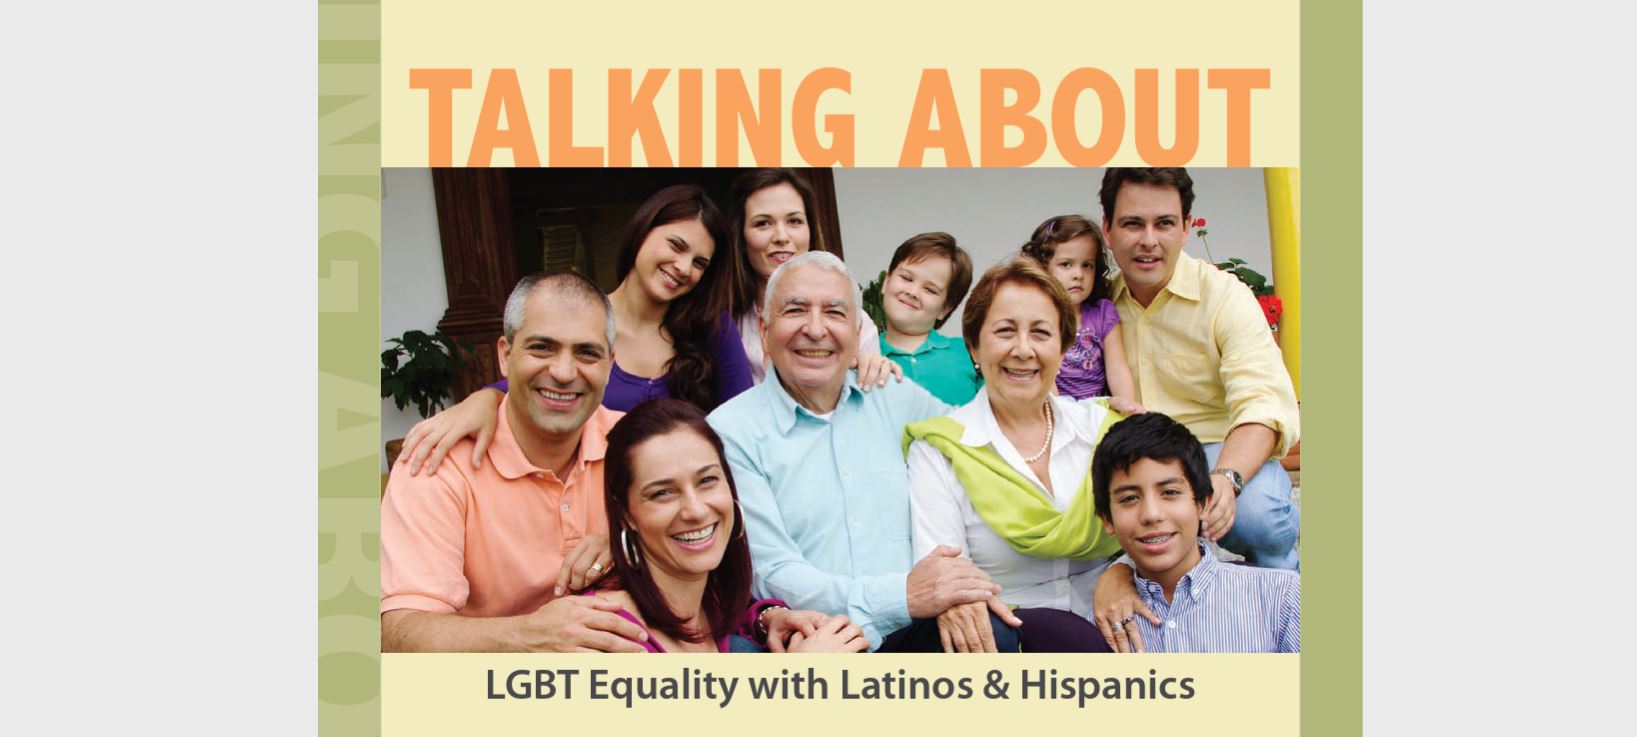 Talking About LGBT Equality with Latinos & Hispanics (English)